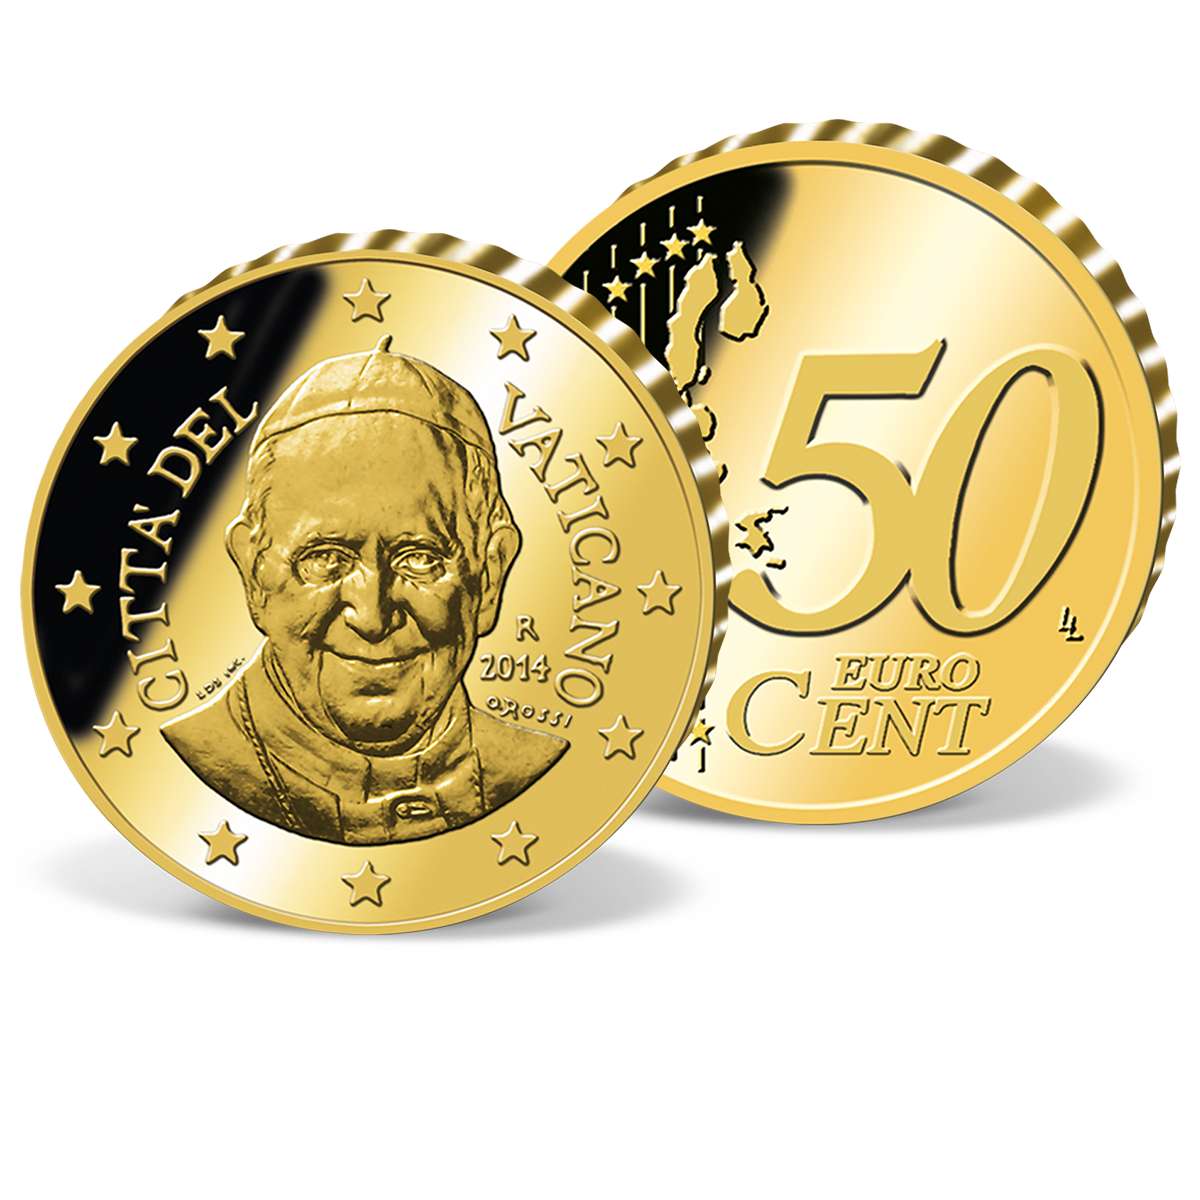 Originalmunze 50 Cent Vatikan Papst Franziskus 14 Weitere Lander Welt Munzkontor